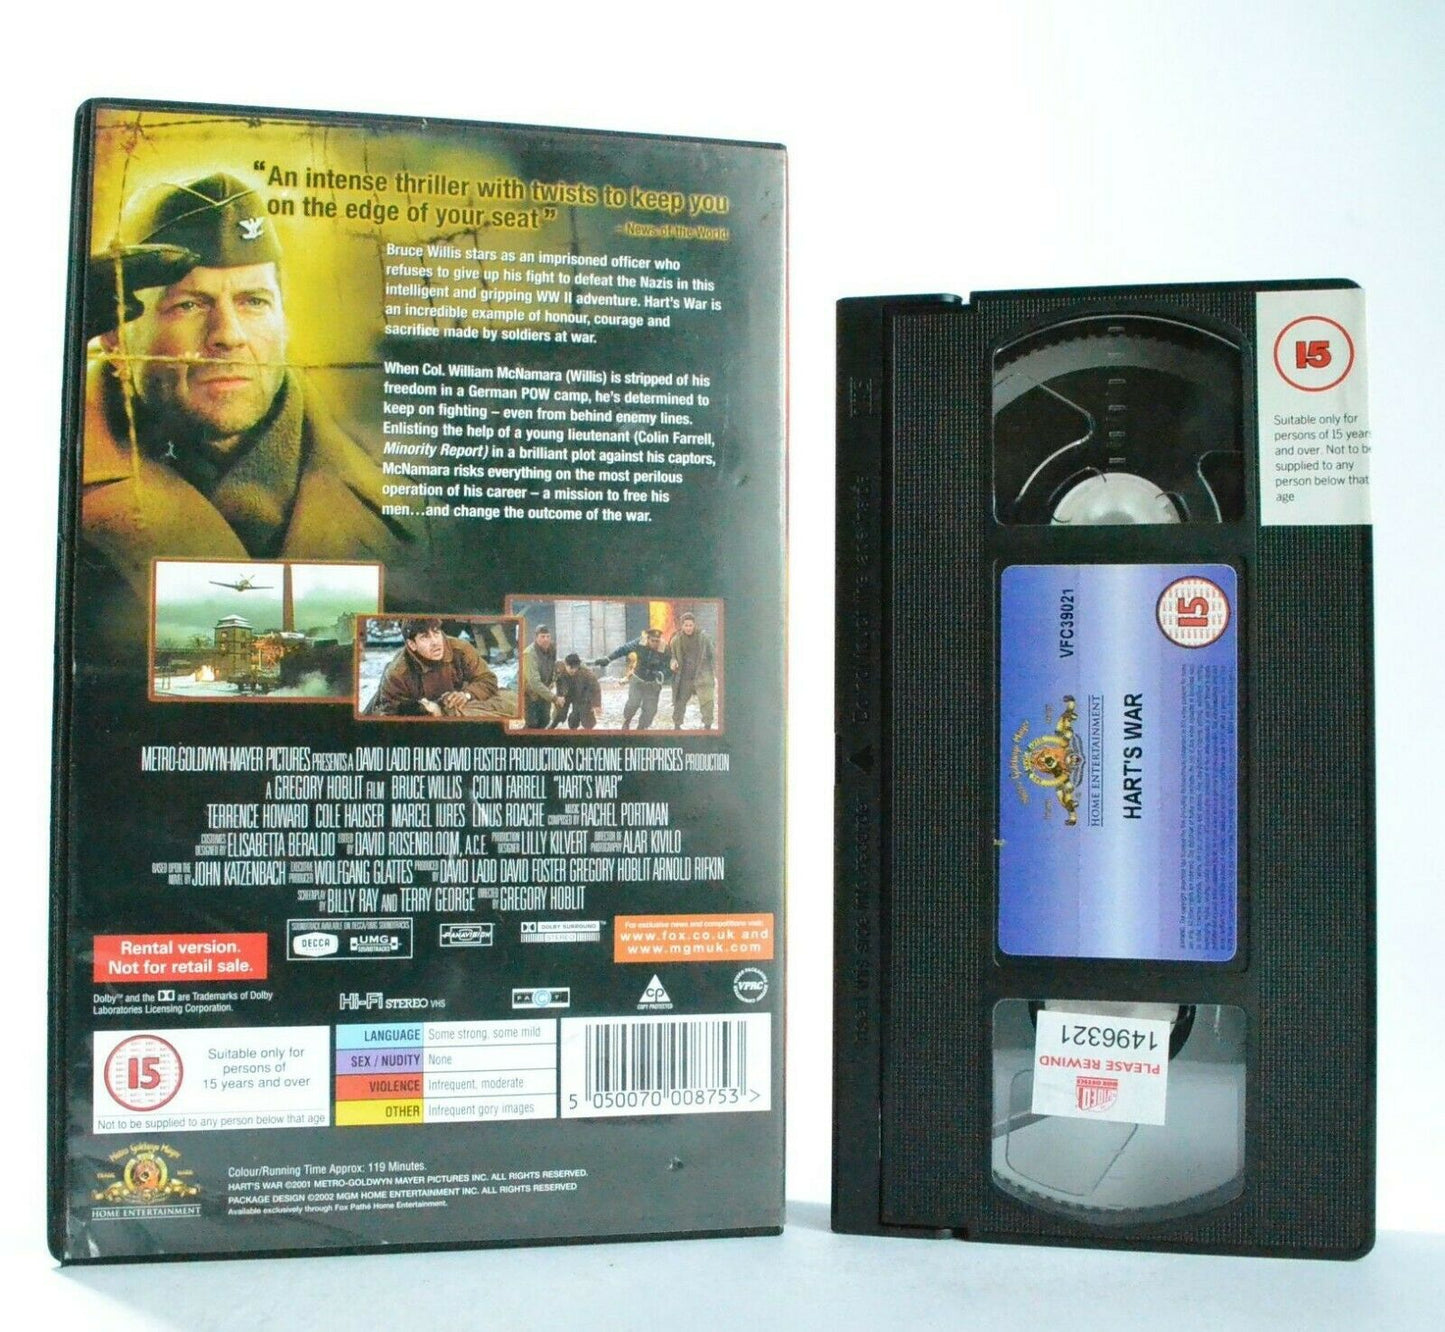 Hart's War: B.Willis/C.Farrell - War Drama (2001) - Large Box - Ex-Rental - VHS-